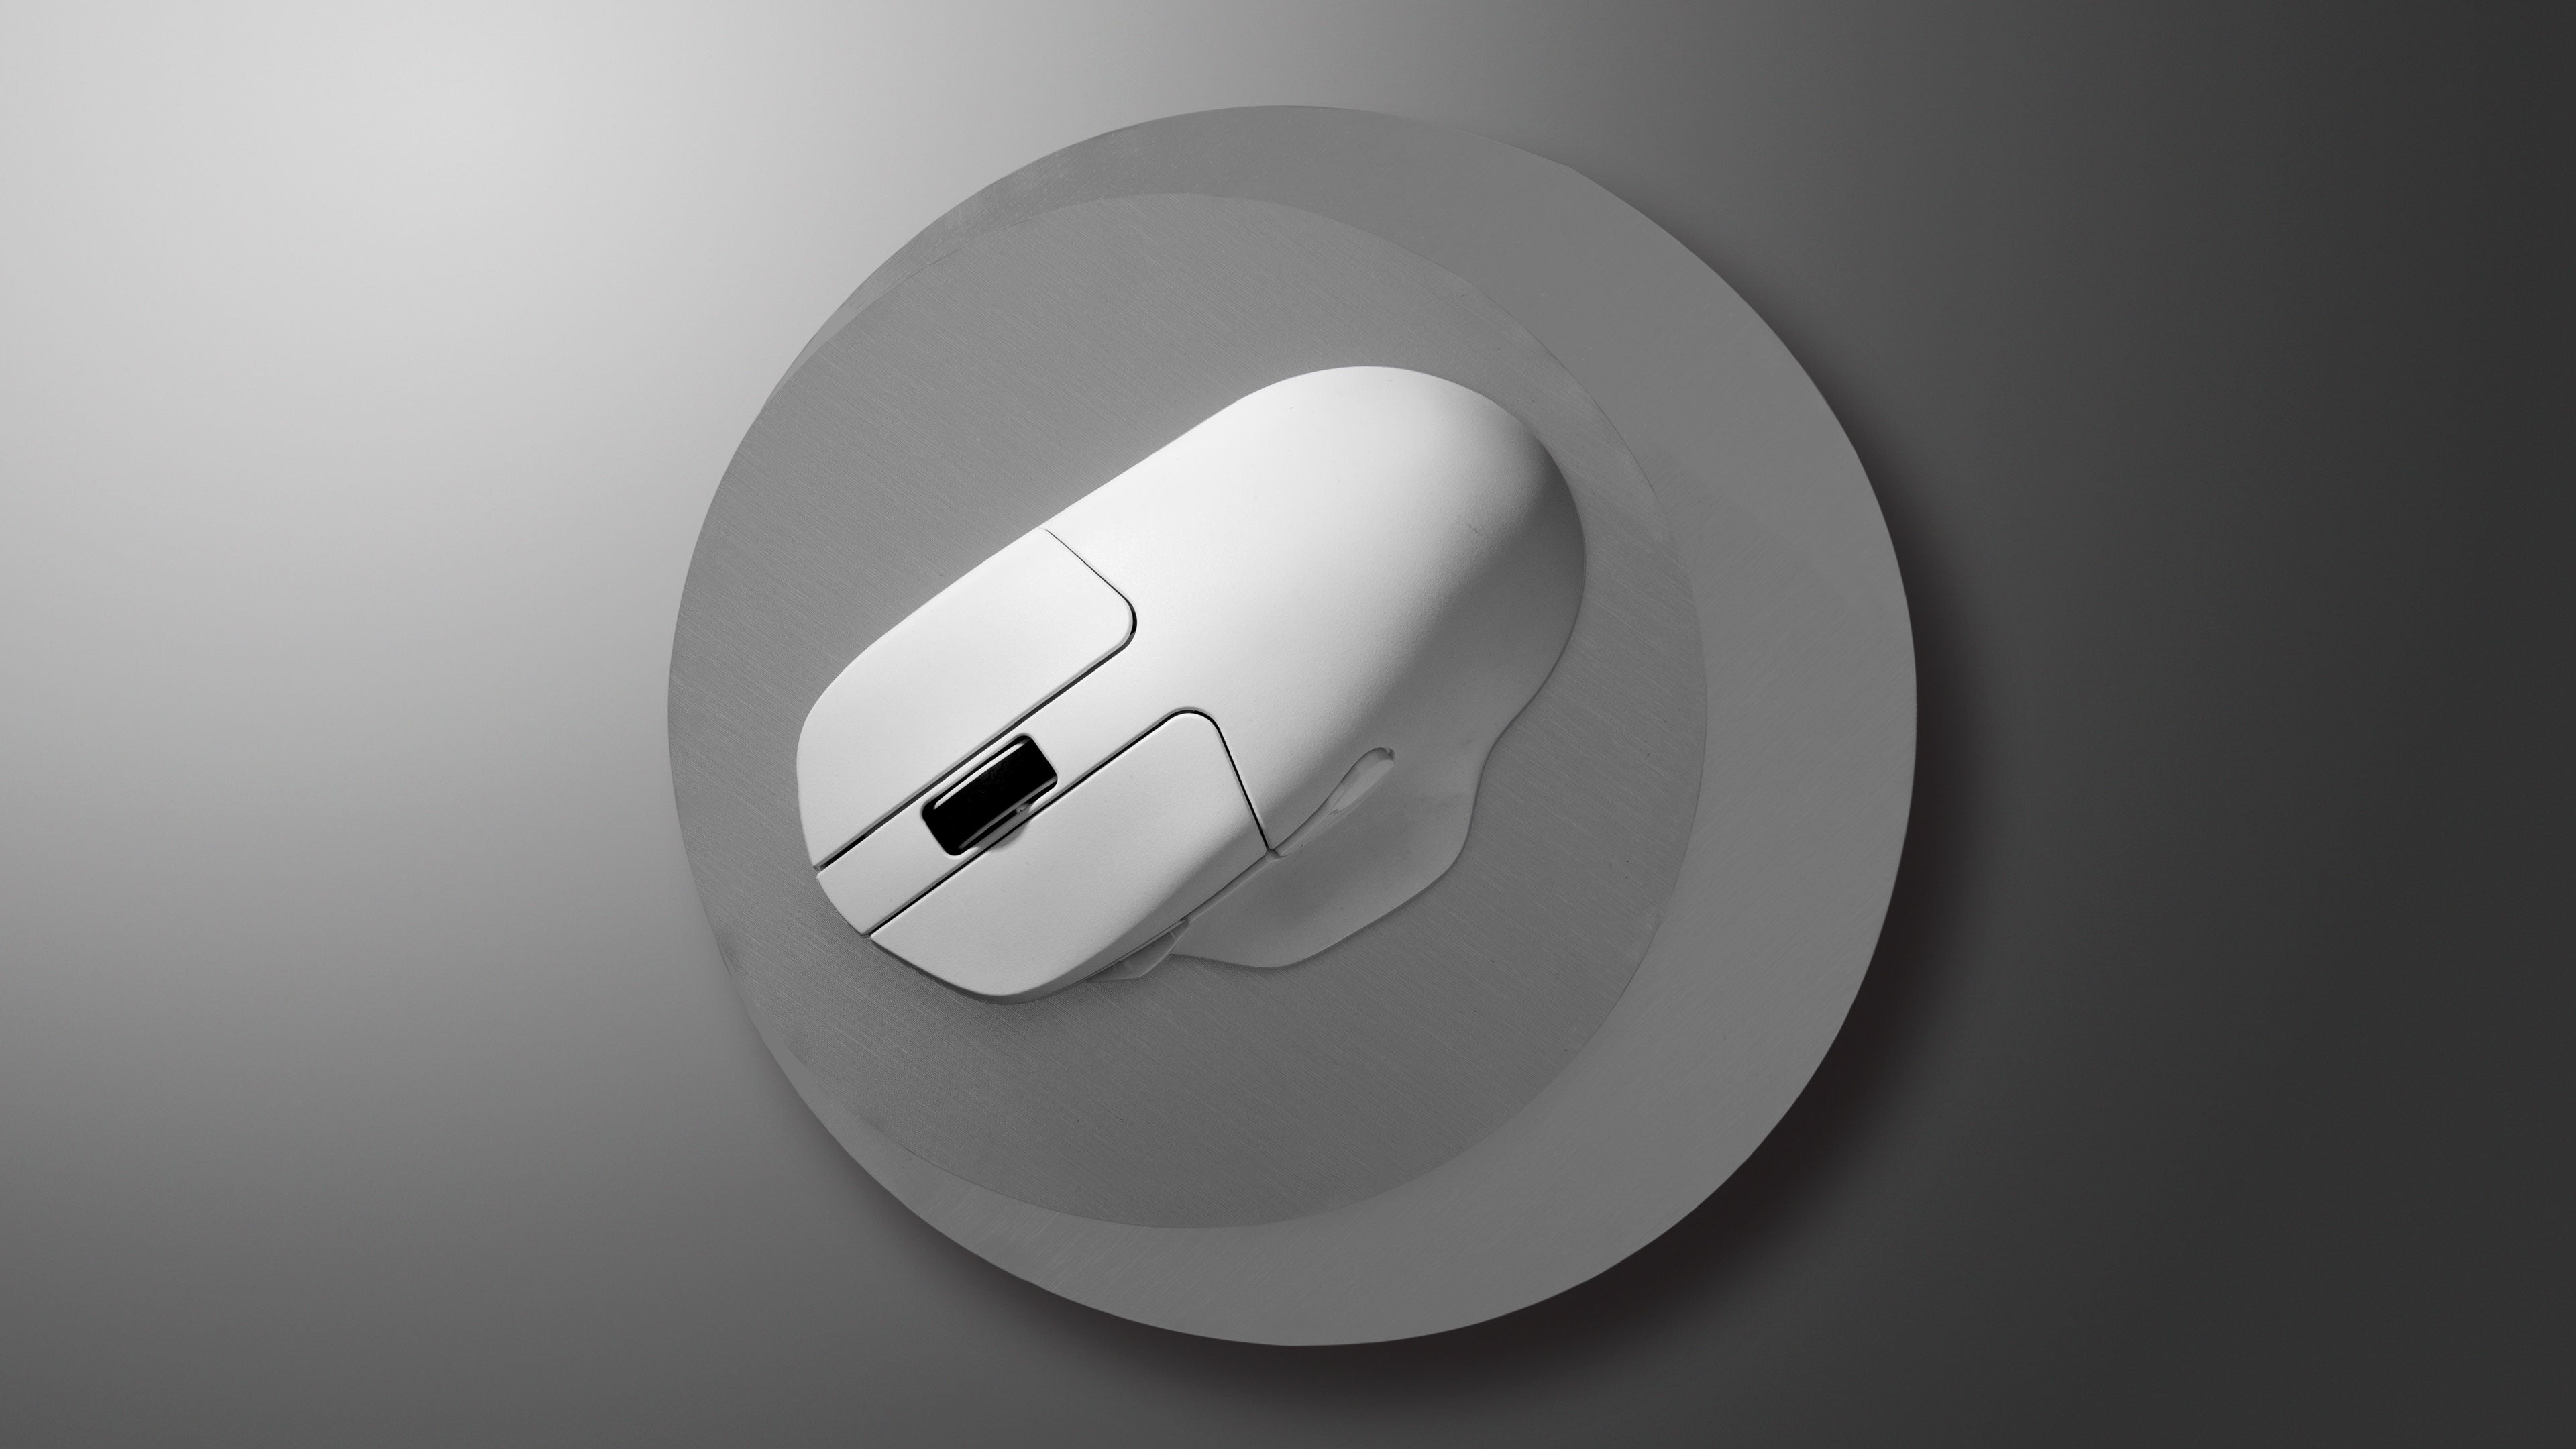 Keychron M7 2.4G wireless mouse